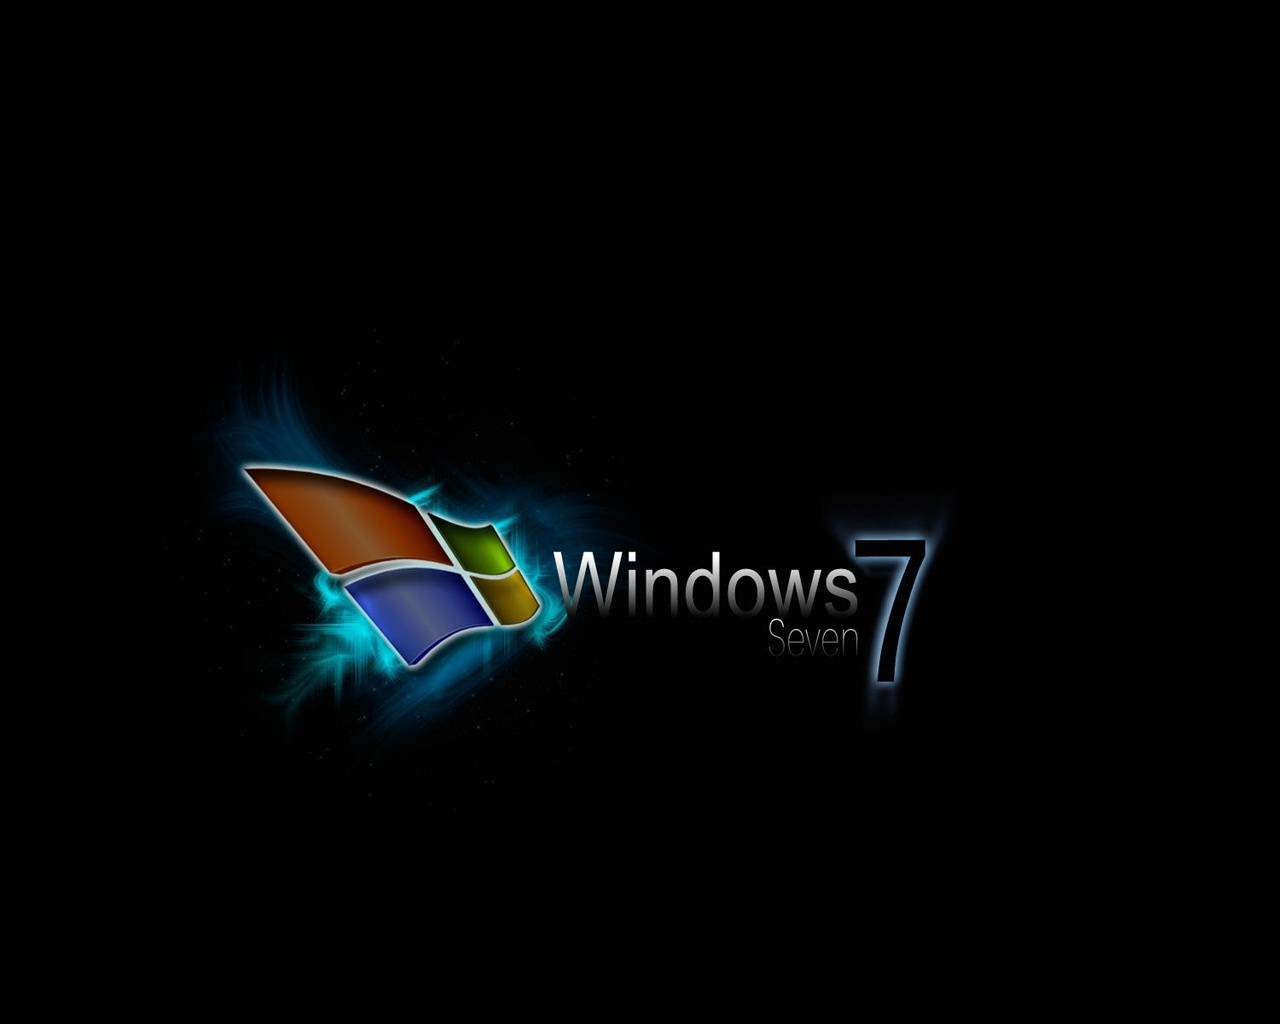 Best Windows 7 for 1280 x 1024 resolution